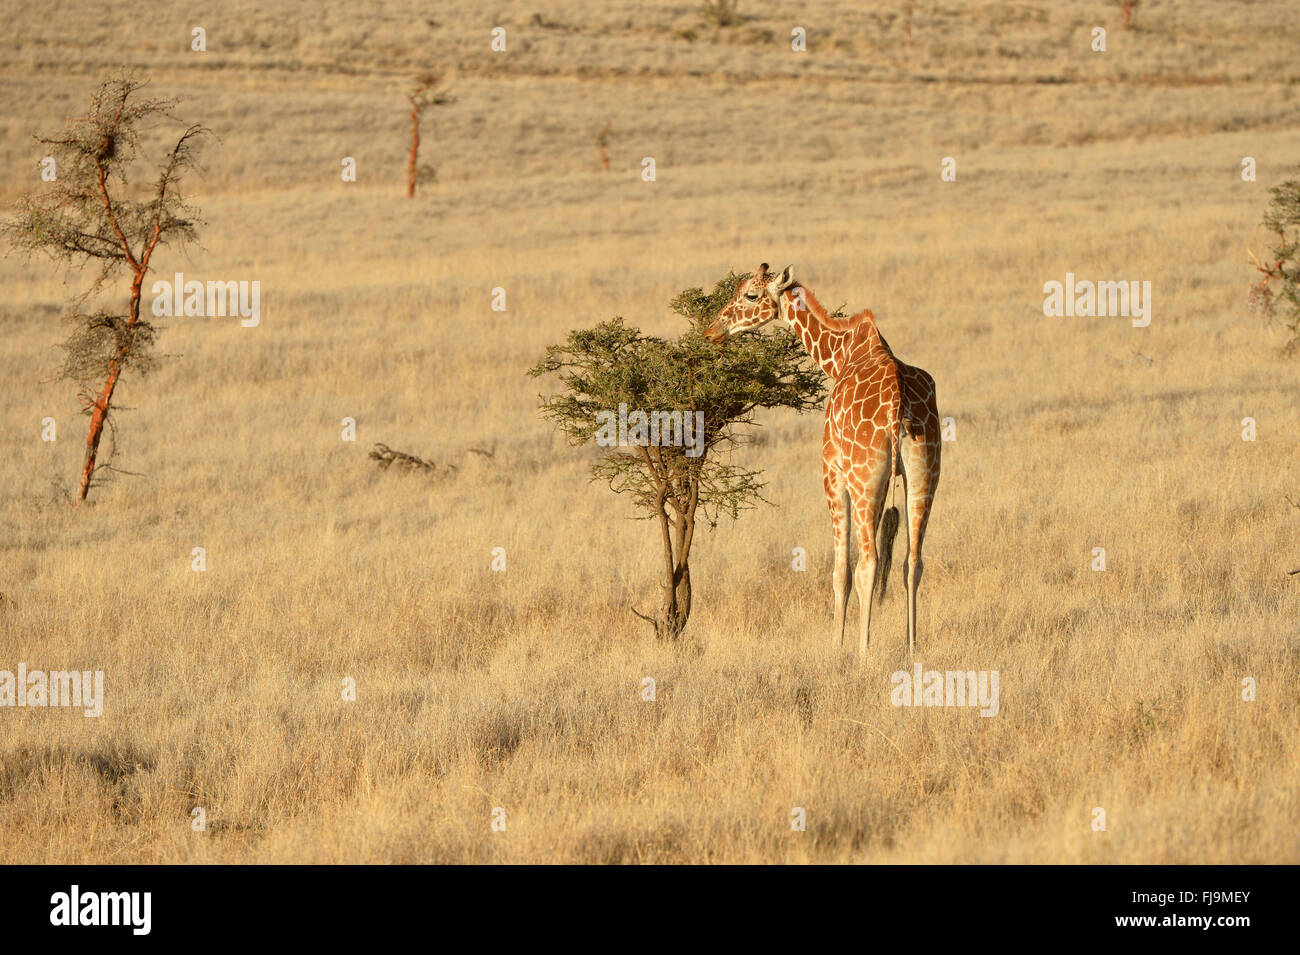 Jirafa reticulada (Giraffa camelopardalis reticulata) menores alimentándose de pequeños árboles de acacia, la Reserva Nacional de Shaba, Kenya, Oc Foto de stock